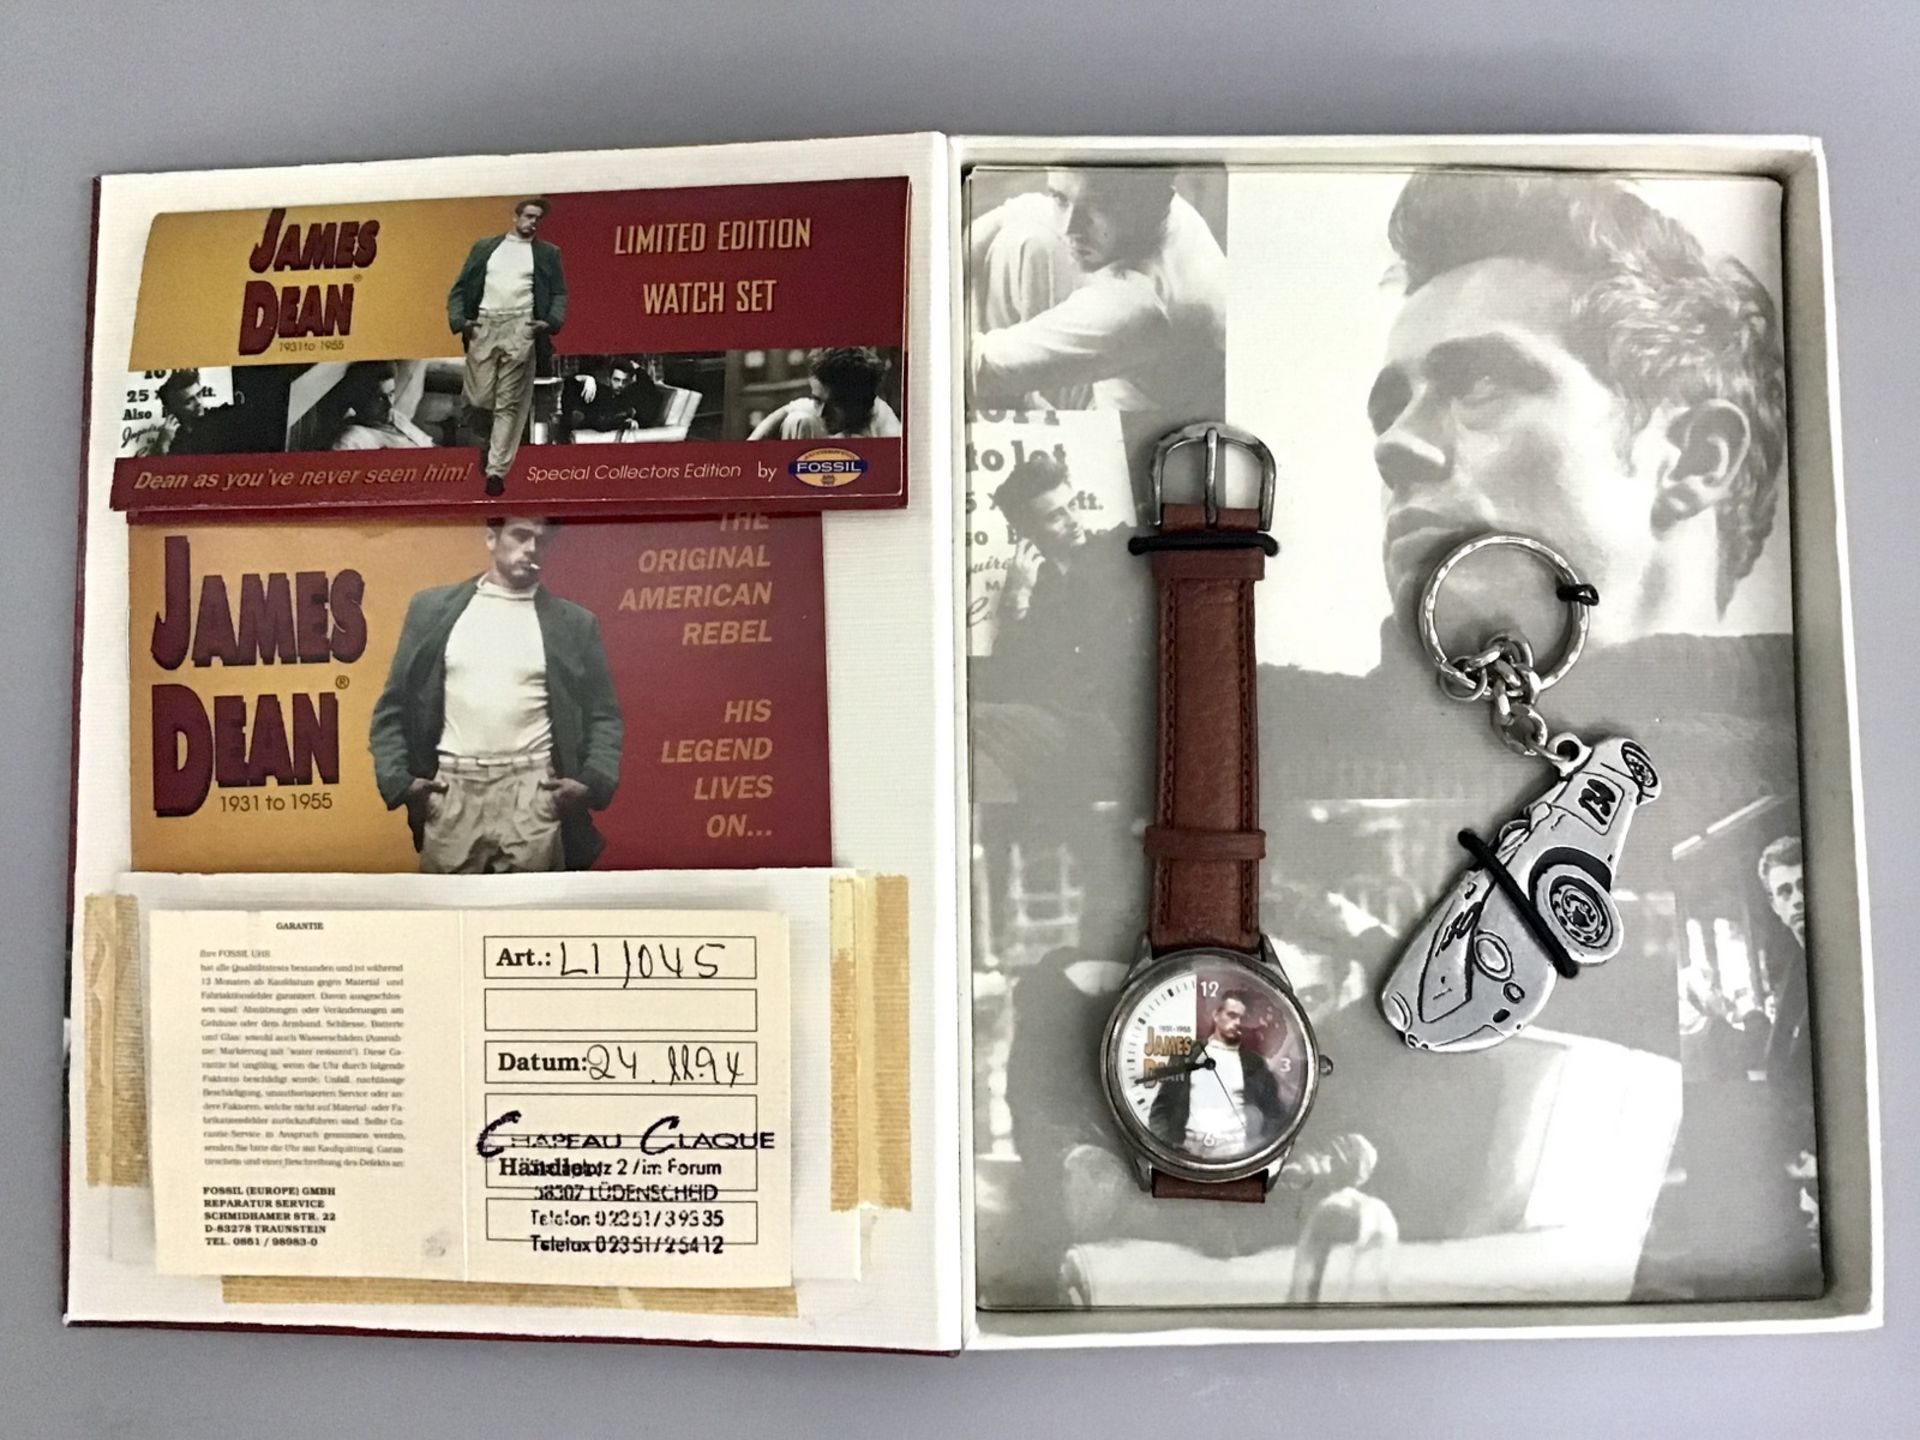 Fossil Sammleruhr "James Dean", Limited Edition Watch Set